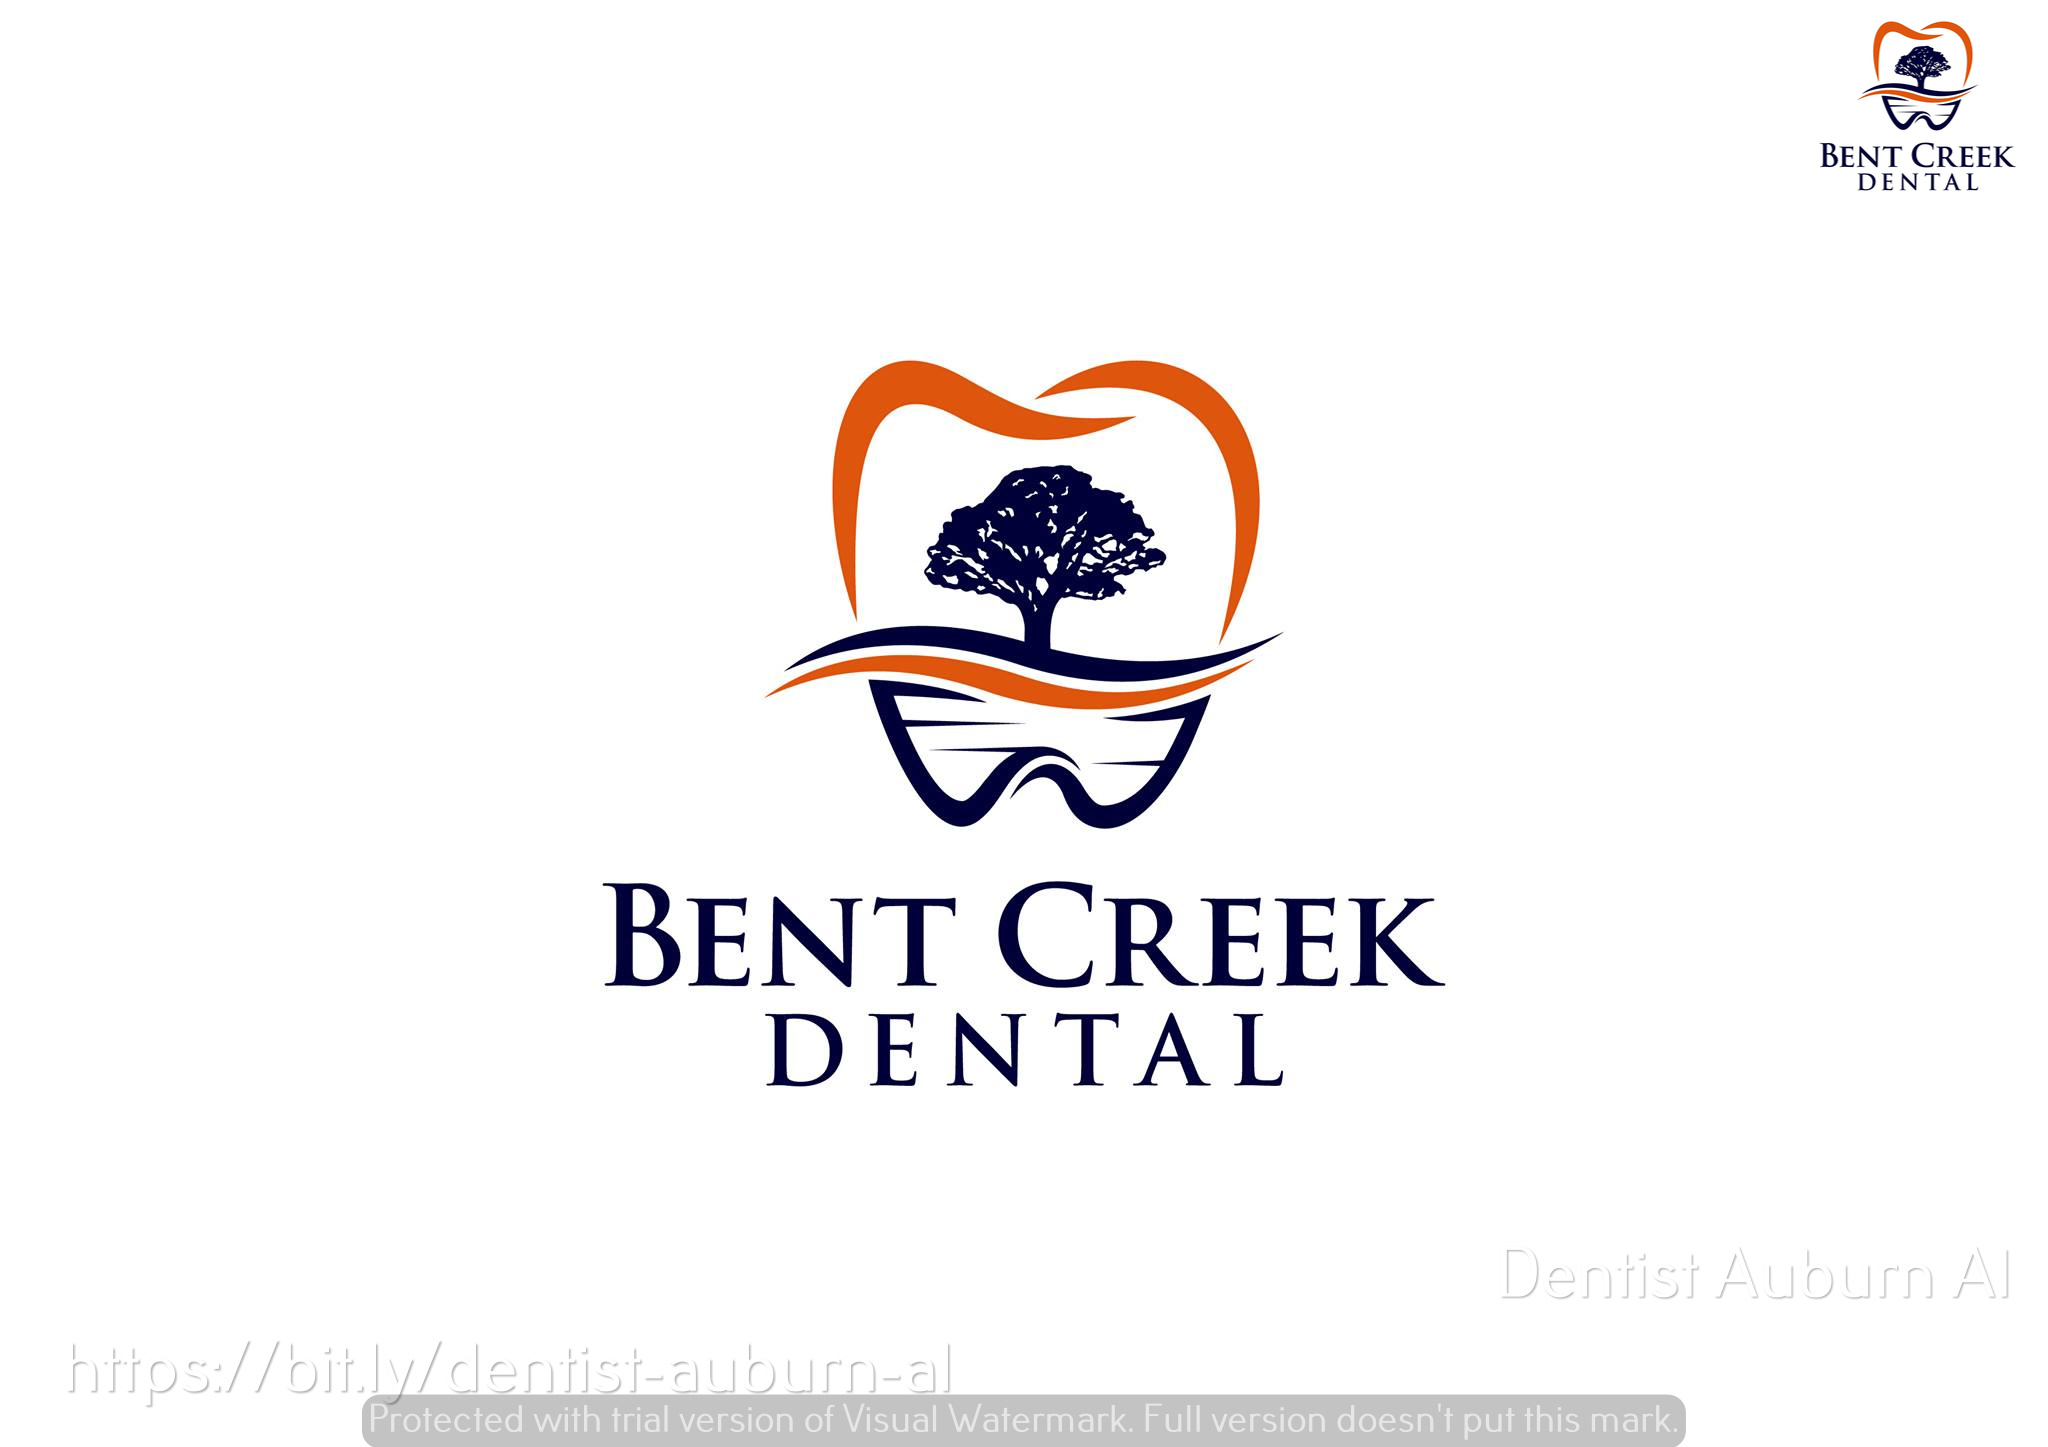 Bent Creek Dental Announces their Key Dental Services